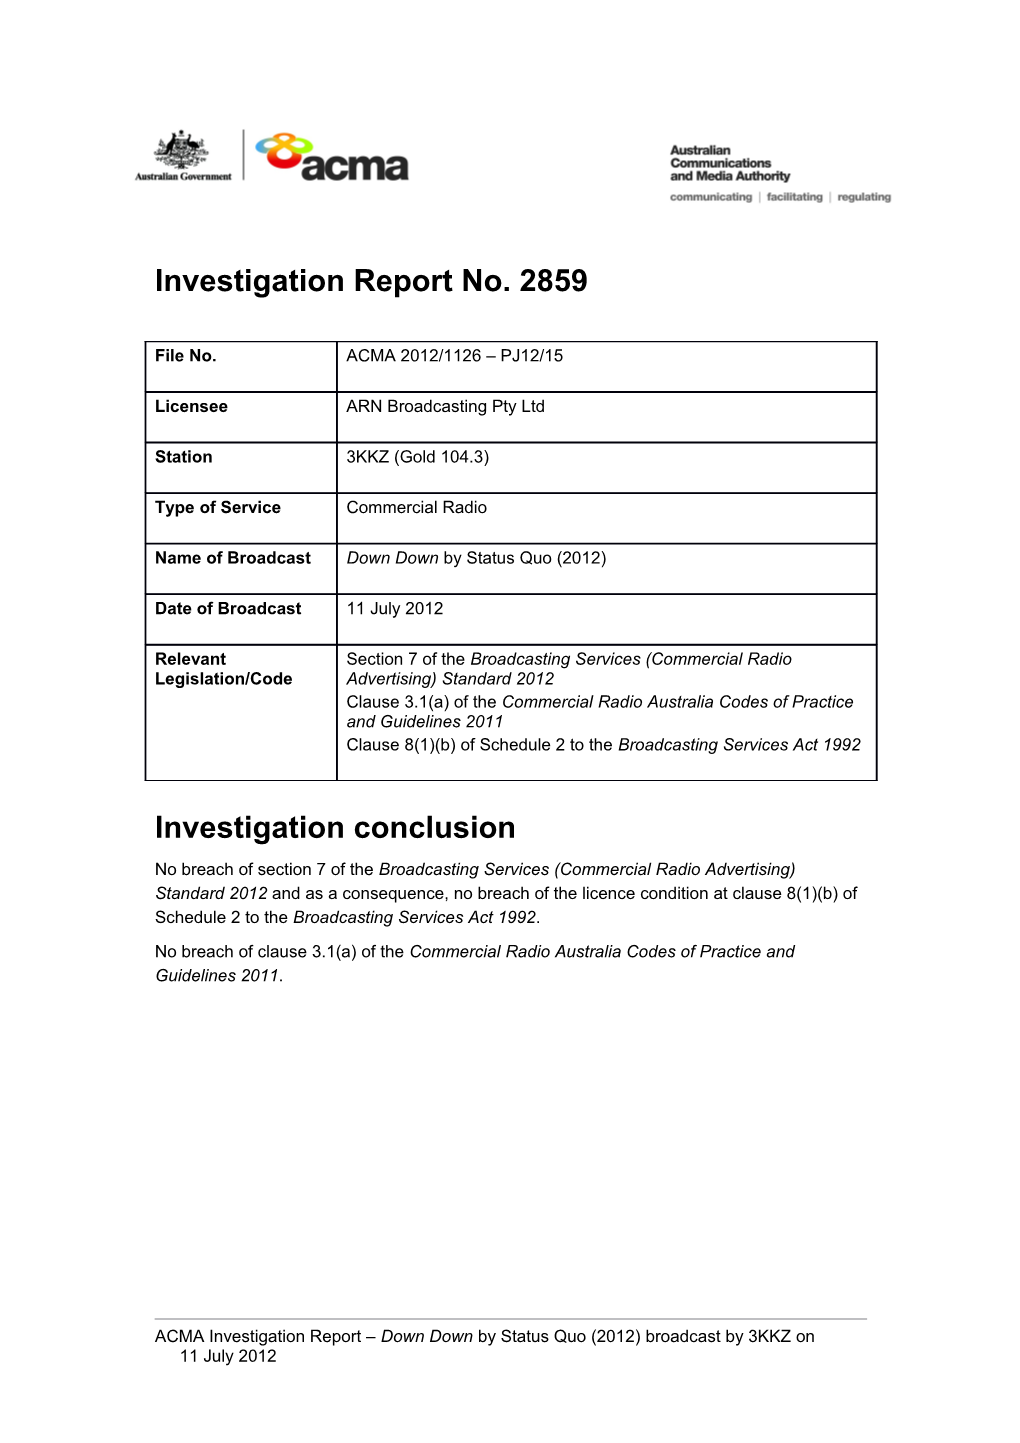 3KKZ (Gold 104.3) - ACMA Investigation Report 2859